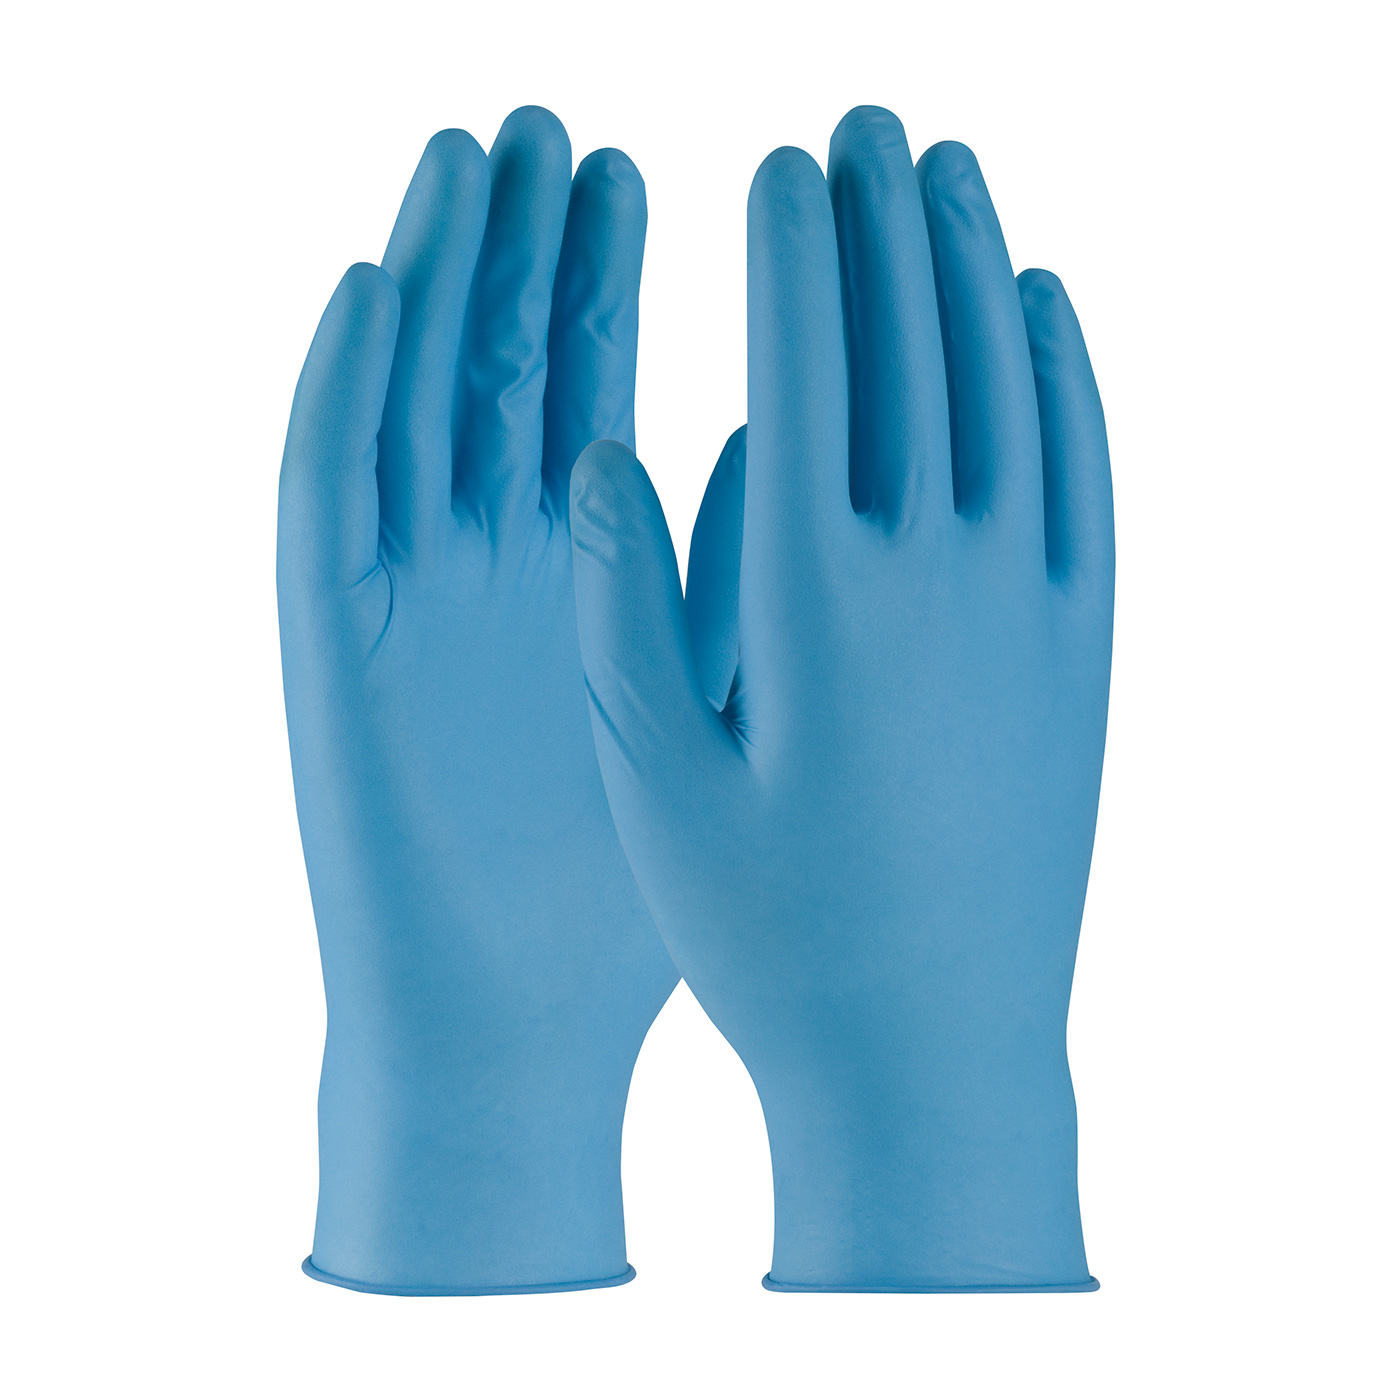 8 MIL POWDER FREE BLUE NITRILE 50/BX - Tagged Gloves